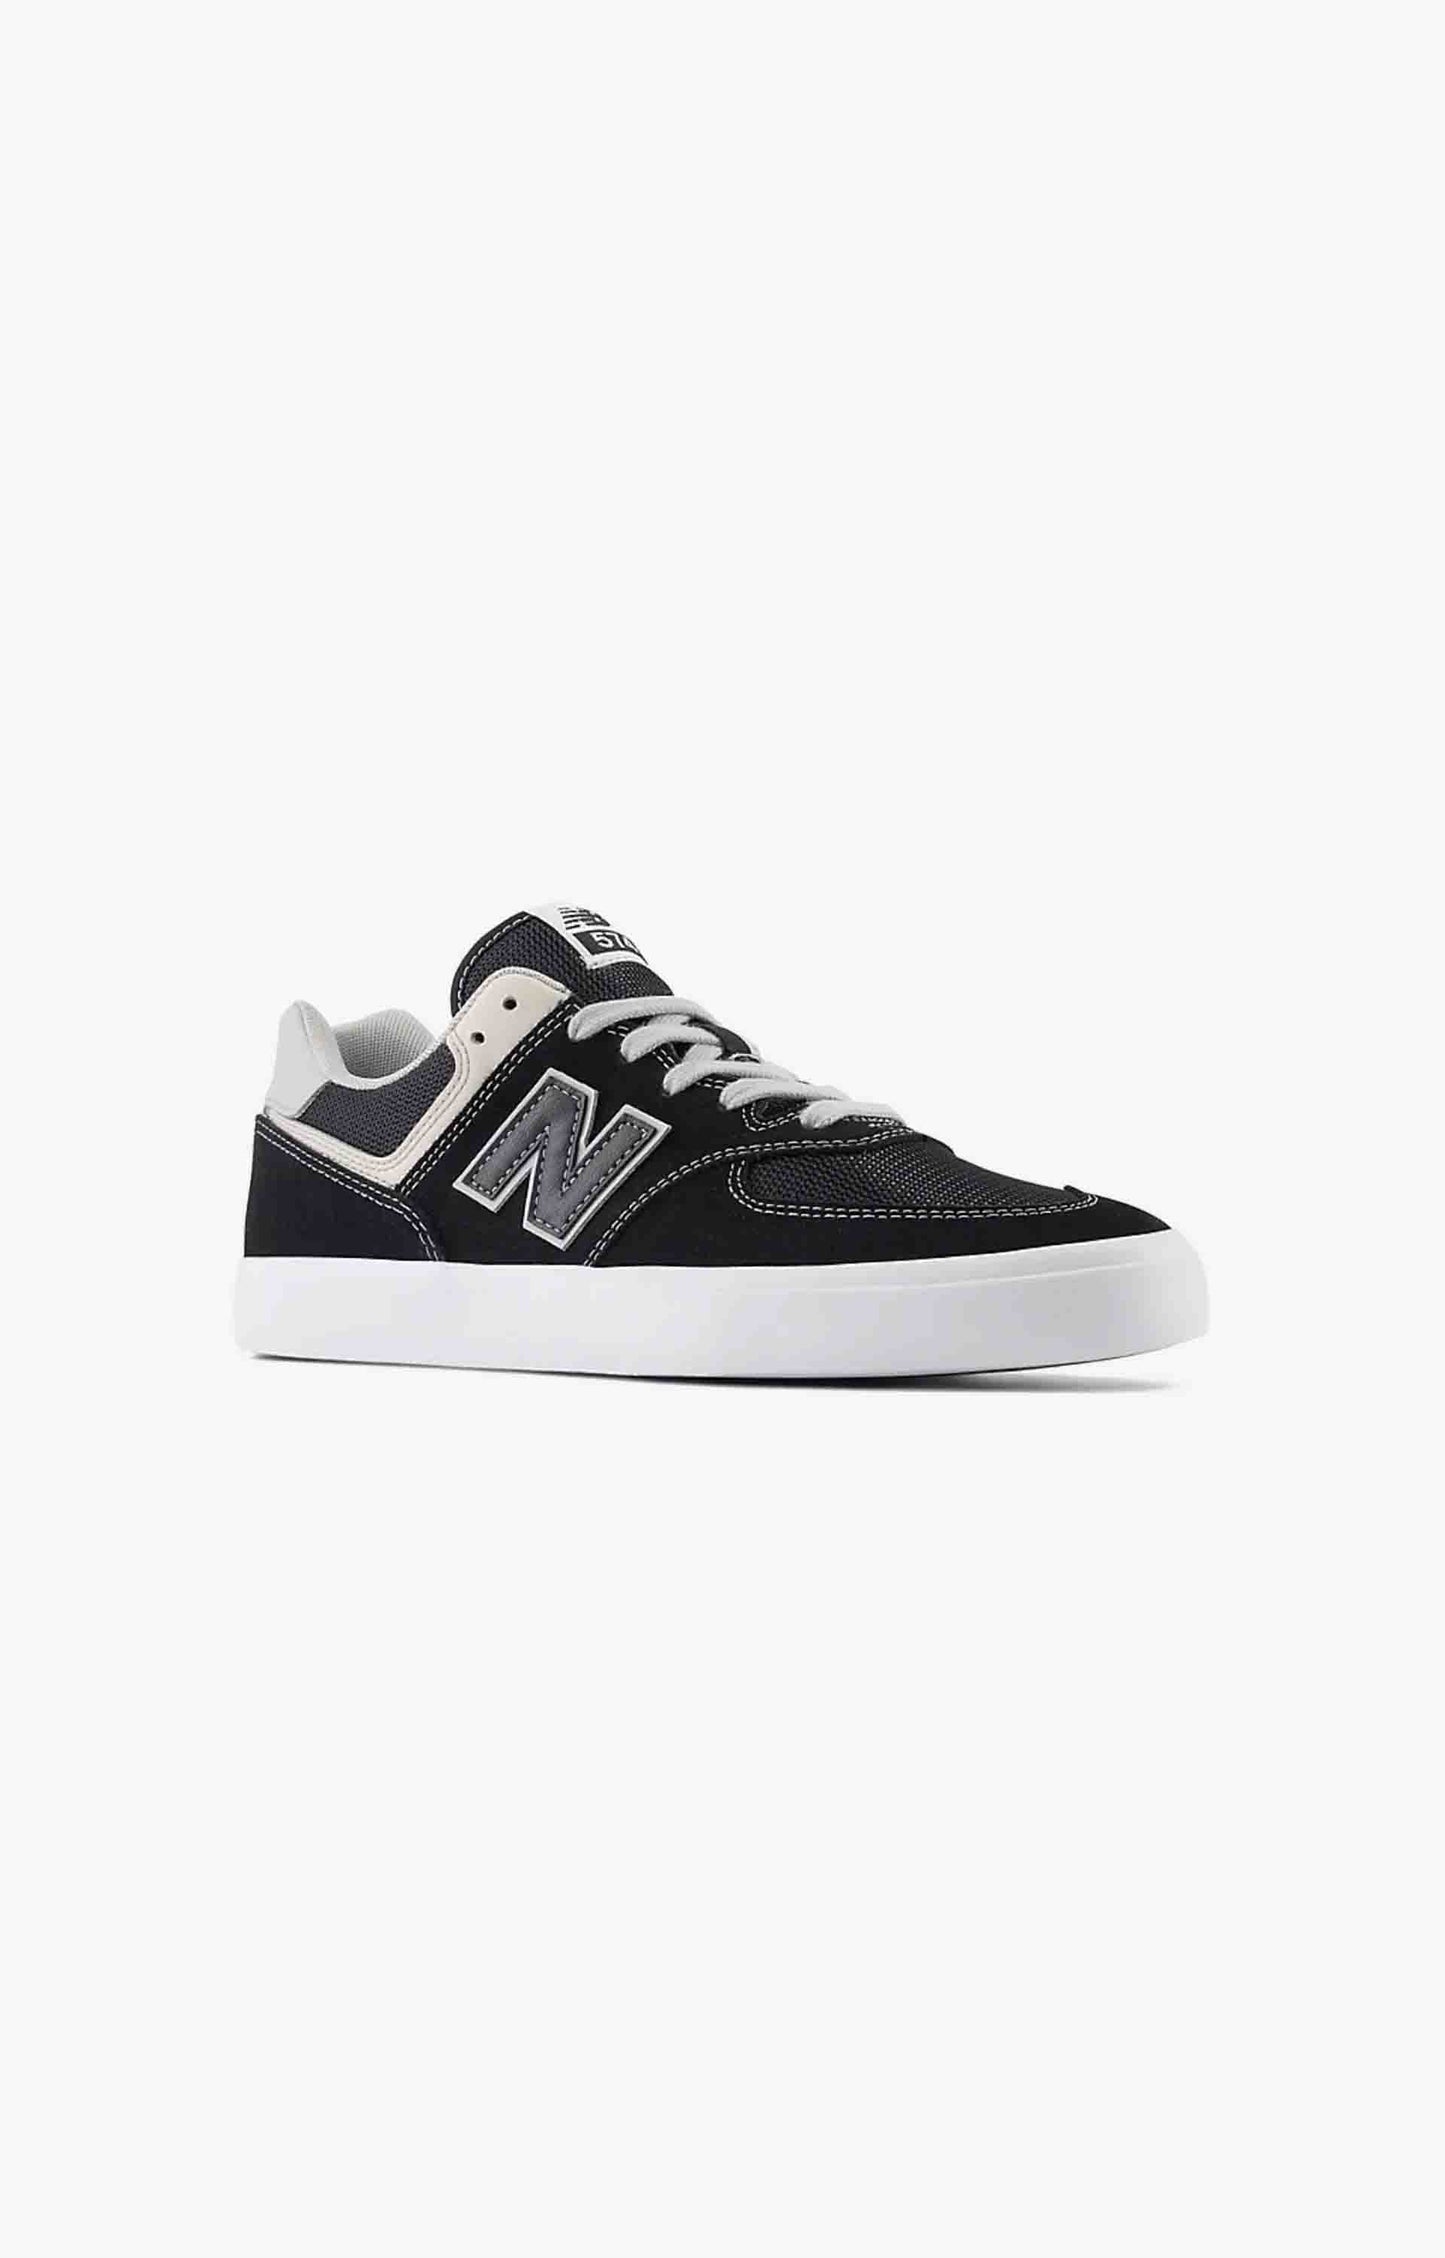 New Balance Numeric NM574VCB Shoe, Black/Grey